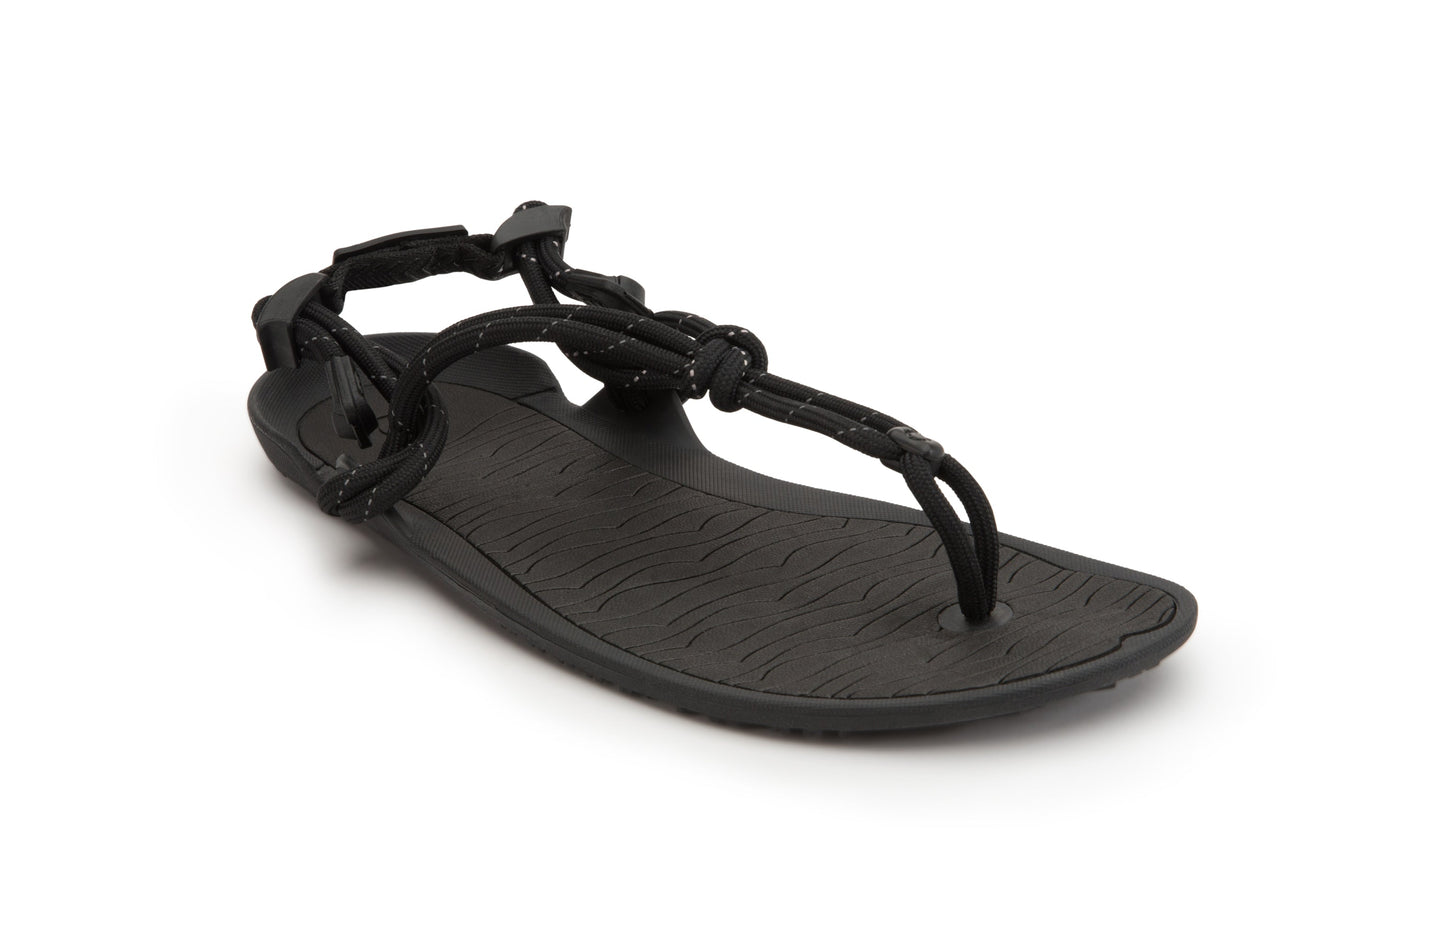 Xero Shoes Aqua Cloud Womens barfods minimalistiske sandaler til kvinder i farven black, vinklet